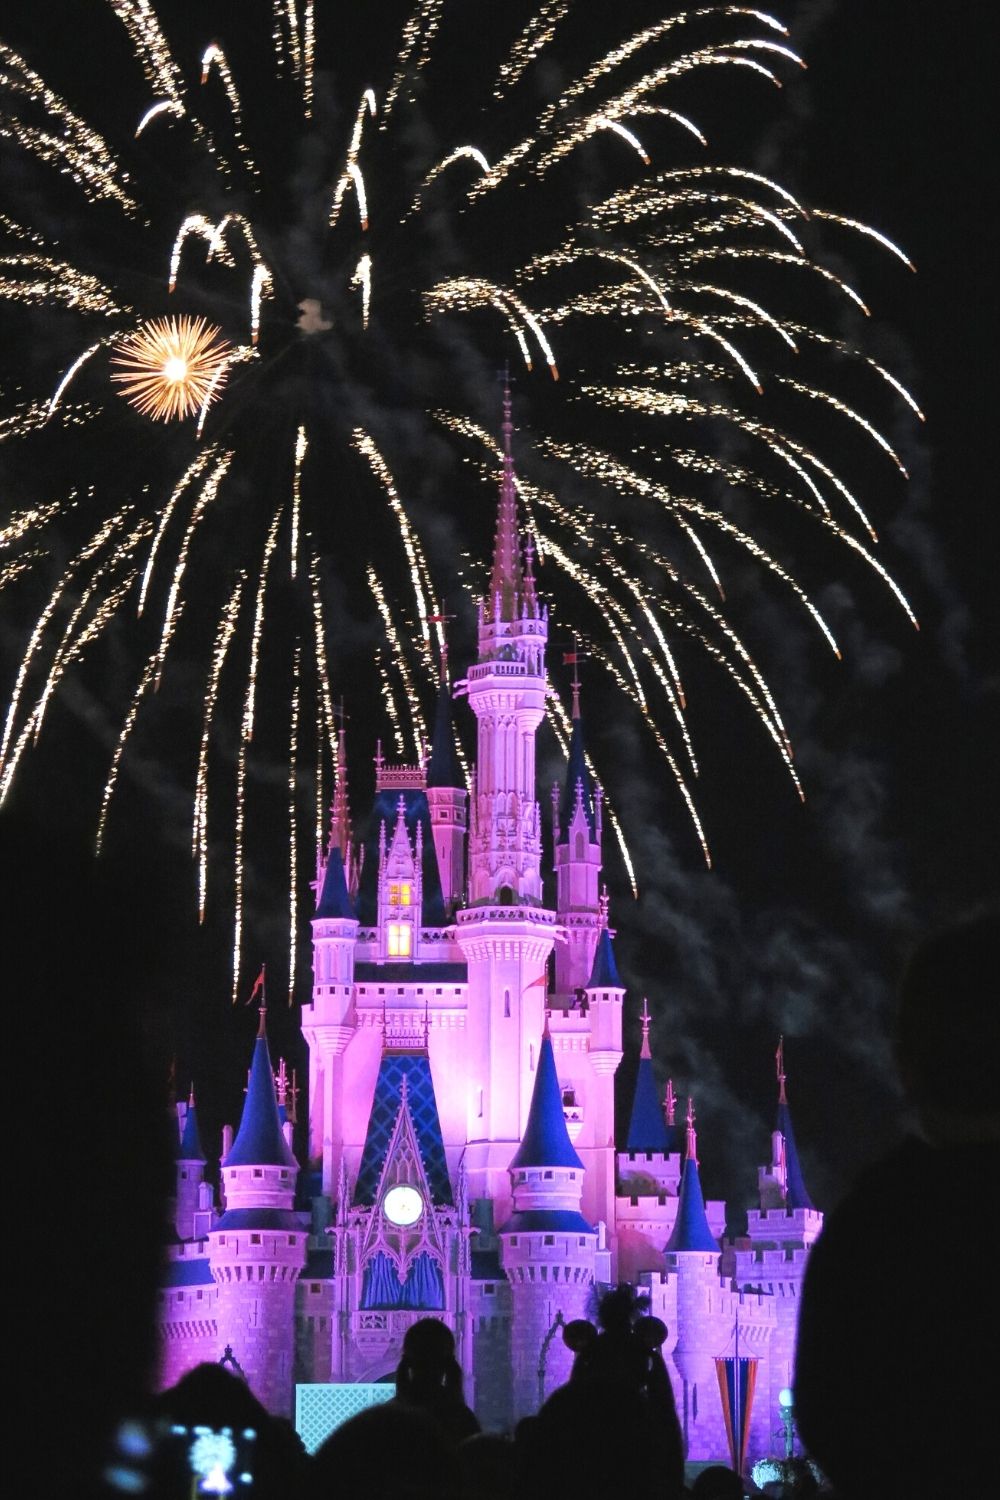 Cinderella's Castle lit up at night at Disney World